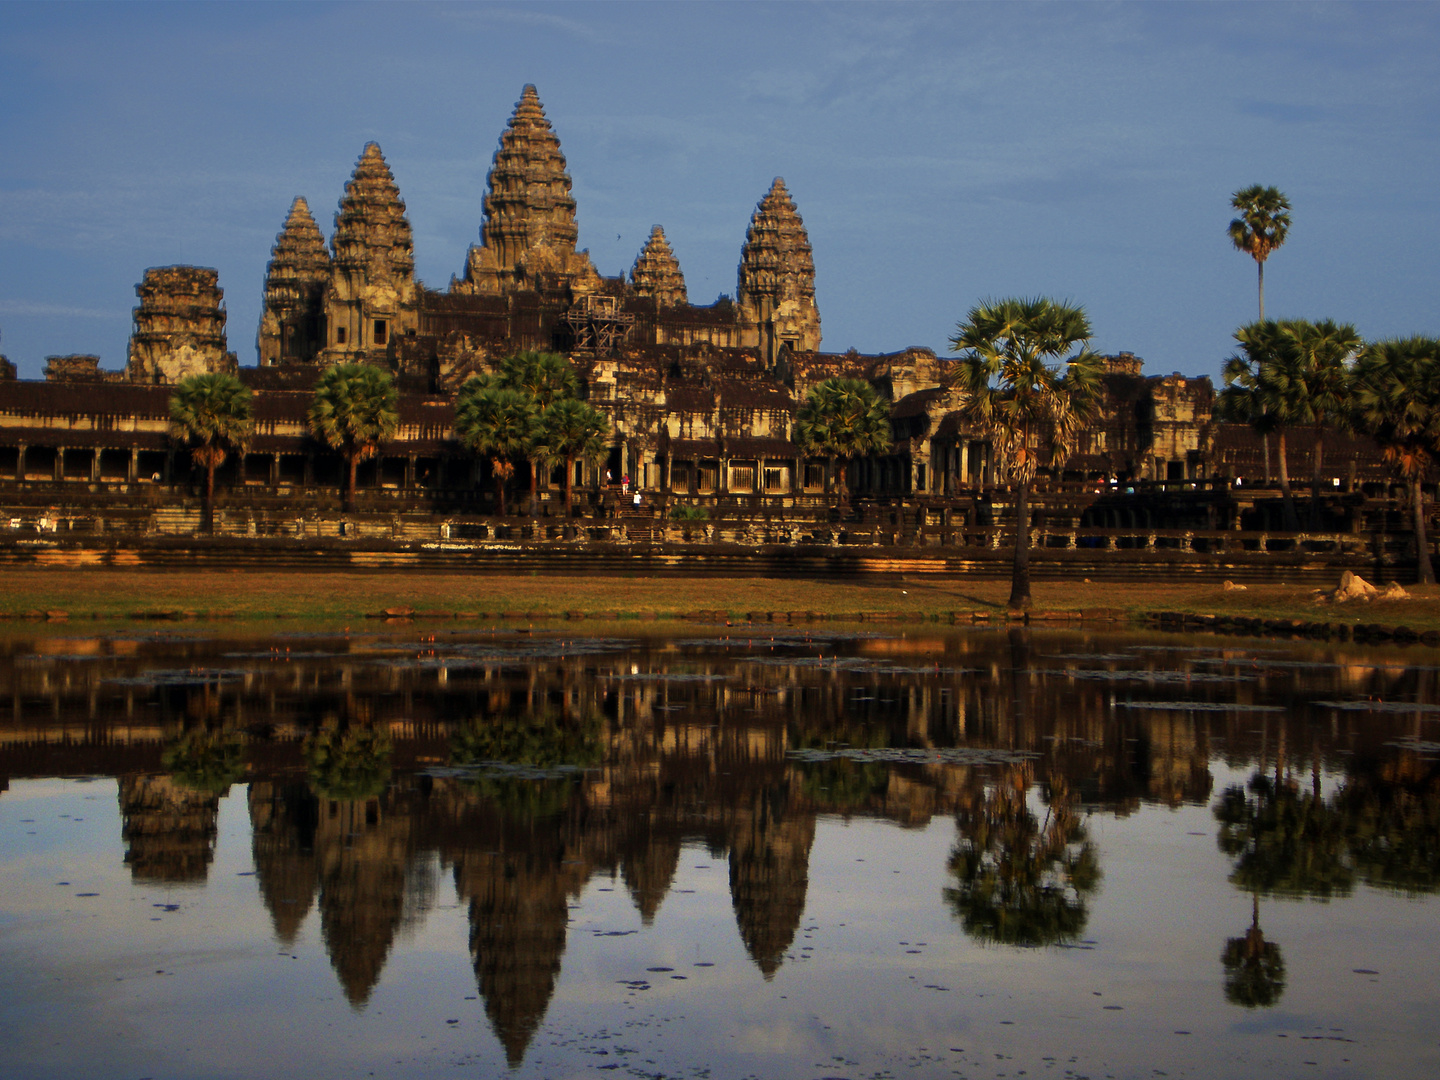 "Das" Angkor Wat